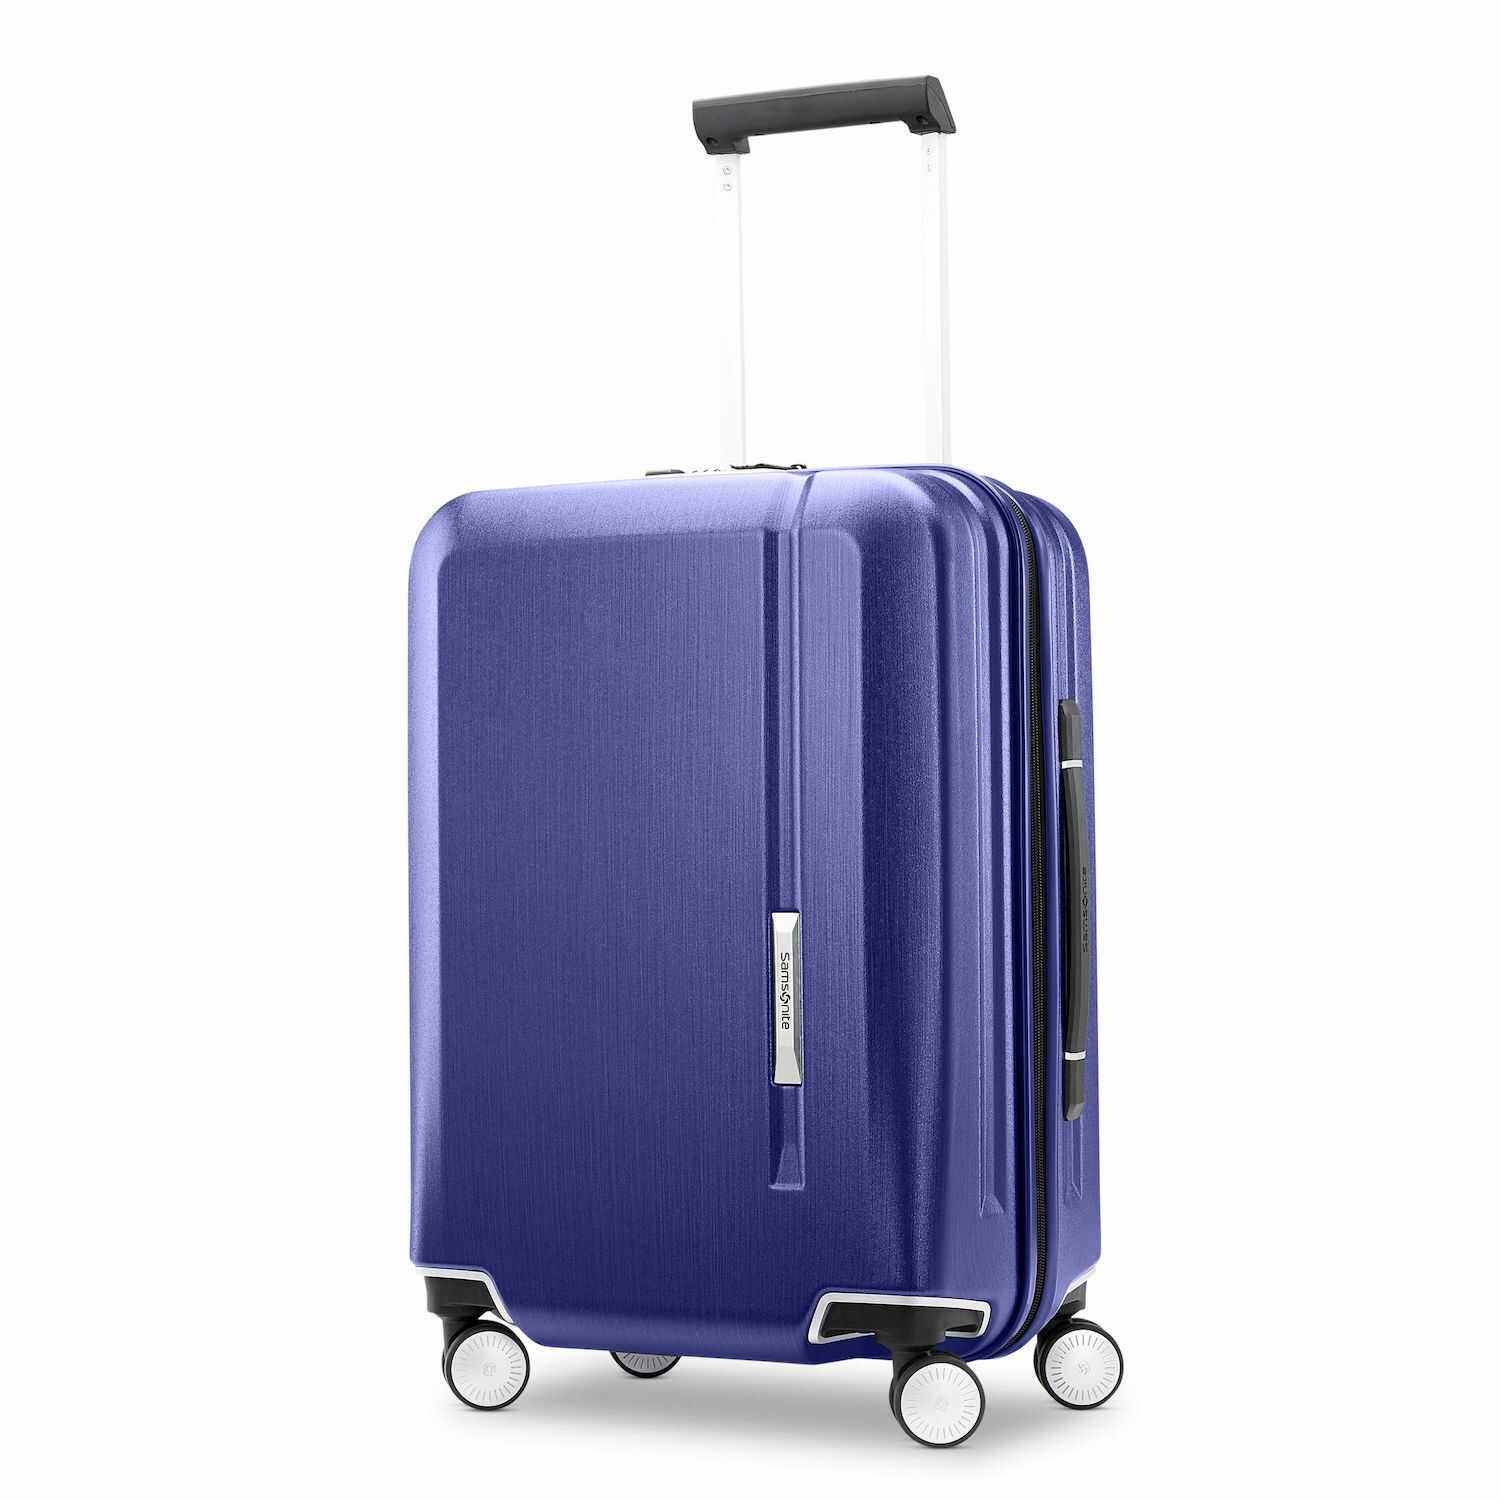 Samsonite Carry-On Luggage